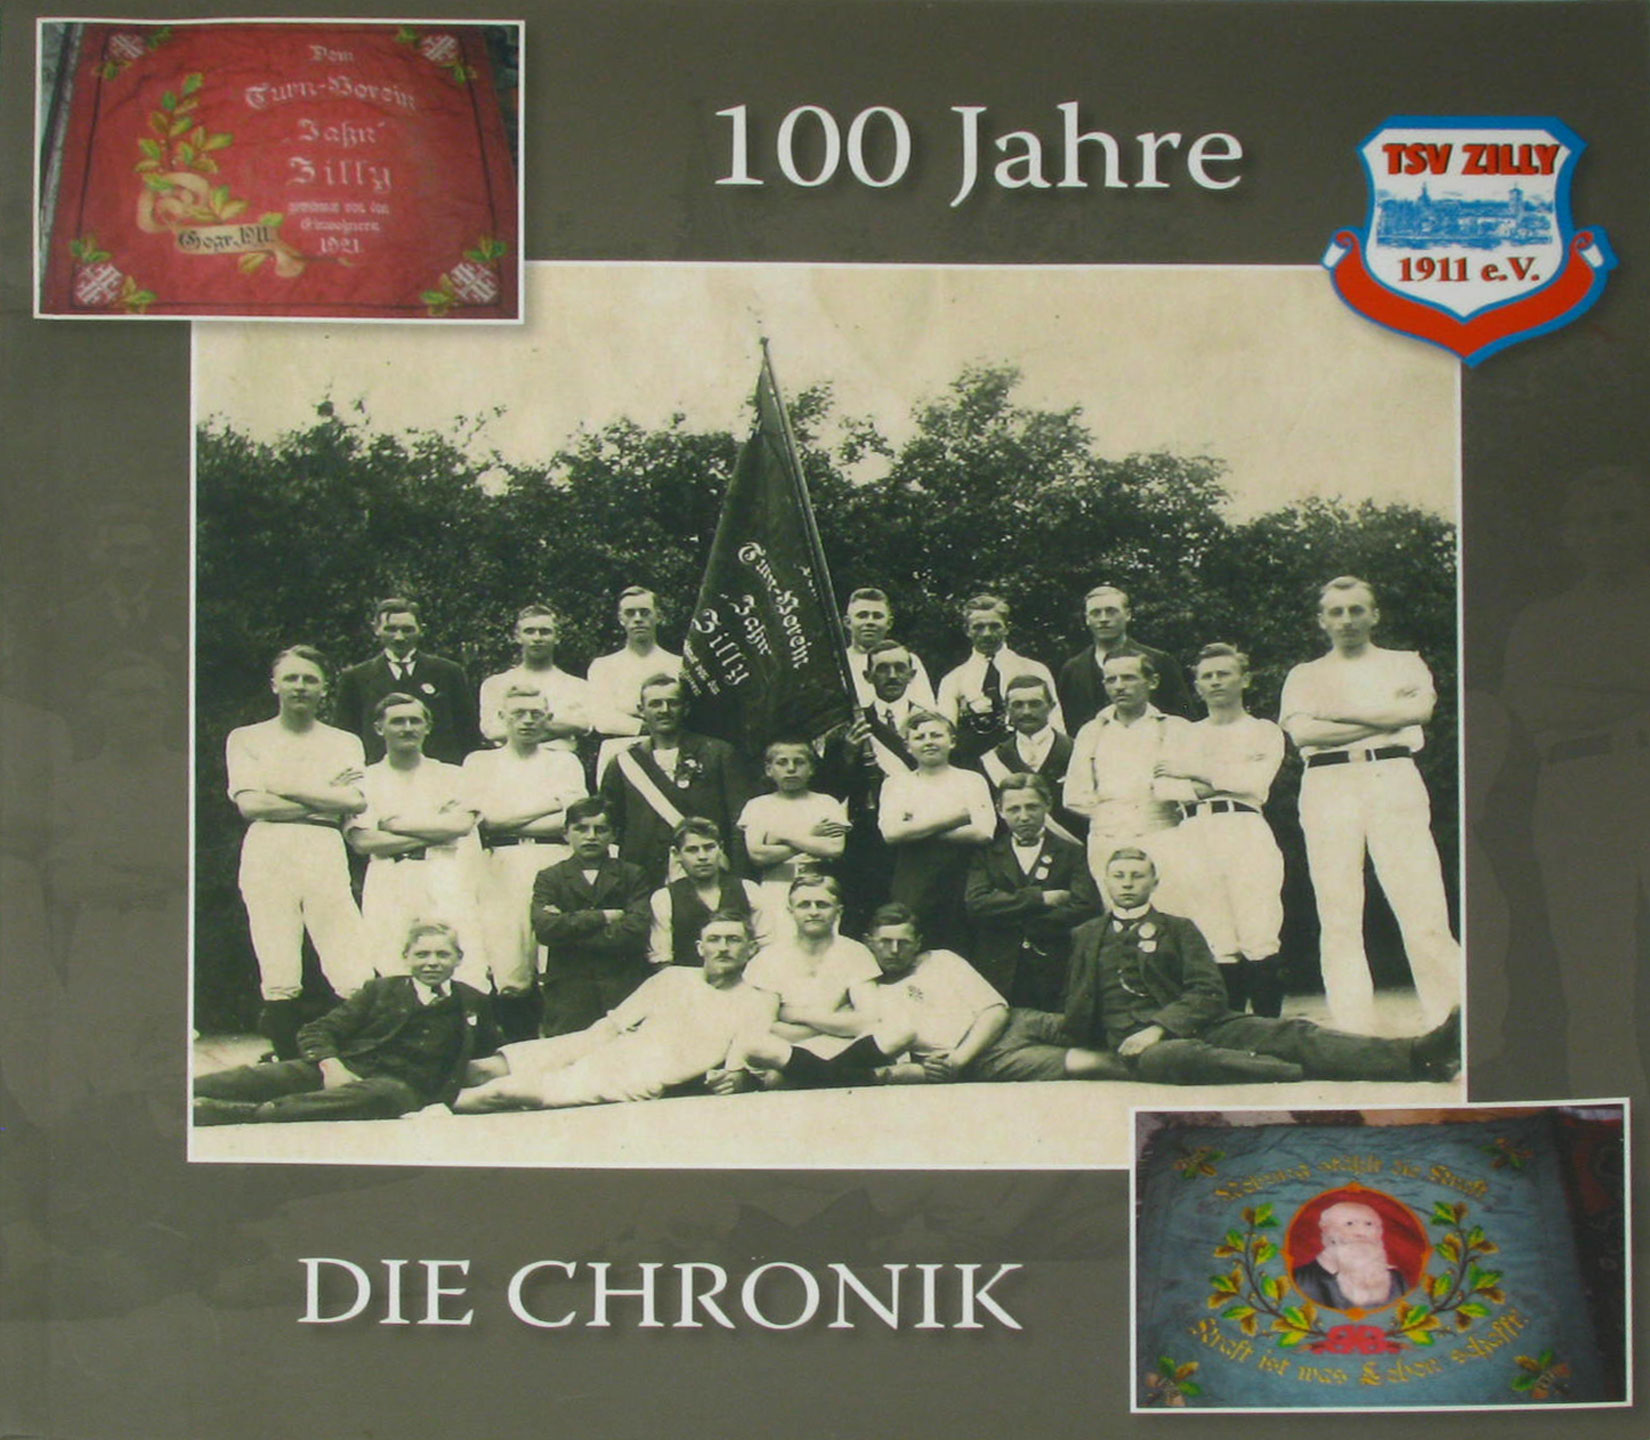 Bäthge, Rainer:  Chronik 100 Jahre TSV Zilly 1911 e. V. 